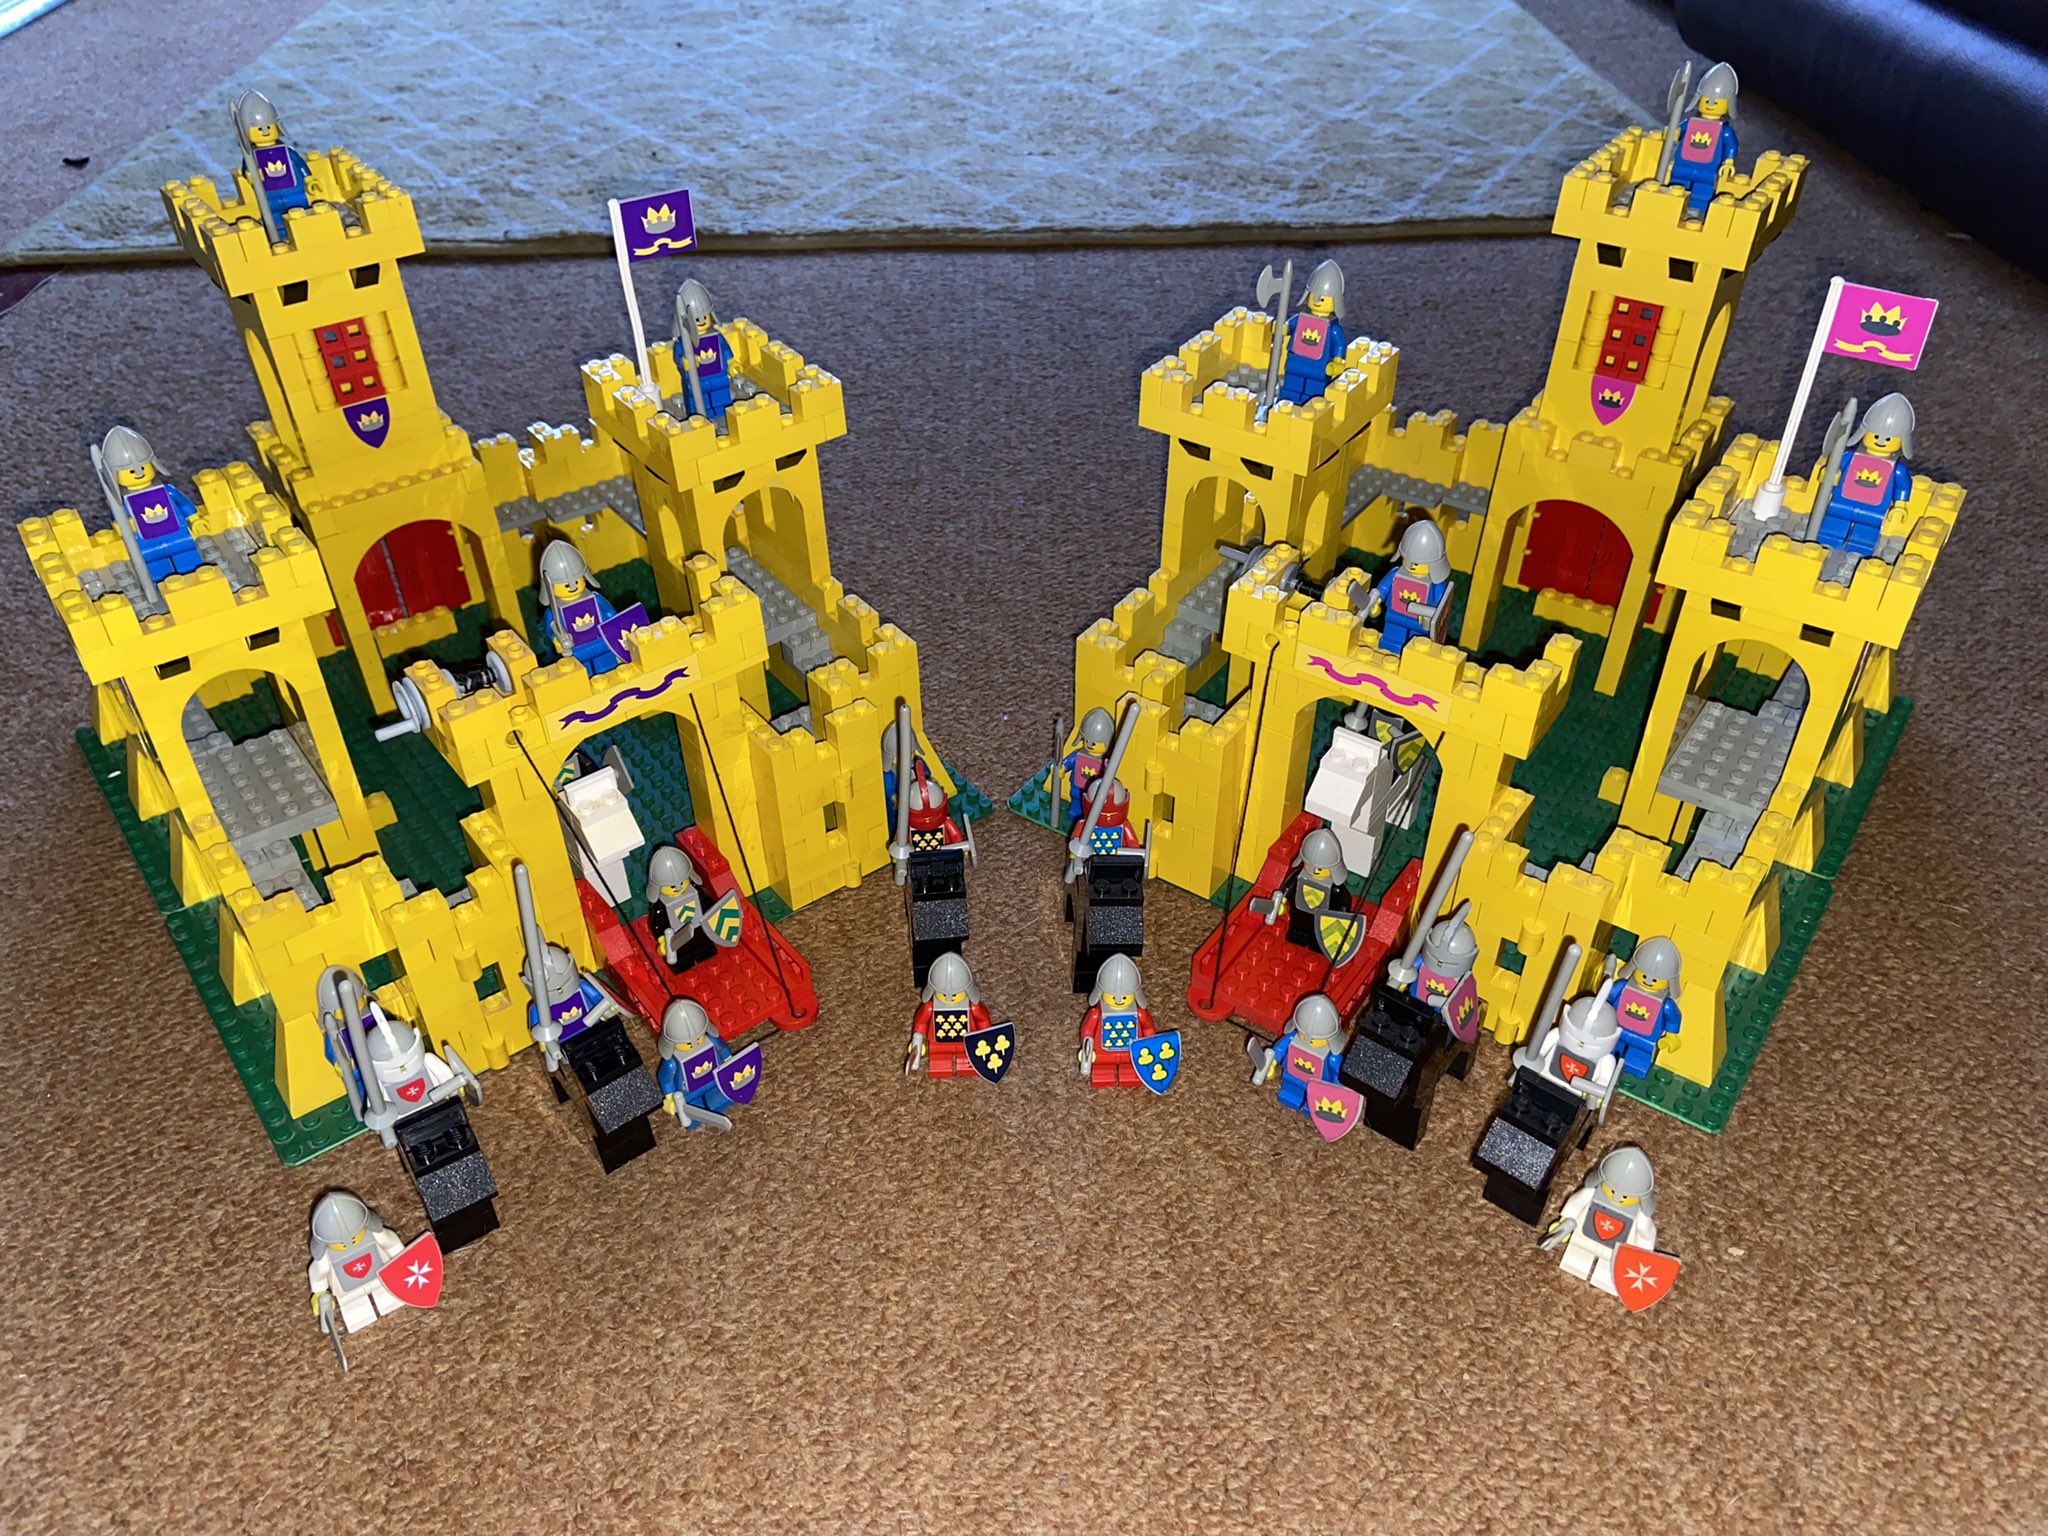 LittleJohn MD on Twitter: "Today we have both Lego Yellow Castle variations 375-1978, 6075-1981 #Lego #LegoYellowCastle https://t.co/usox0sgBZ2" / X